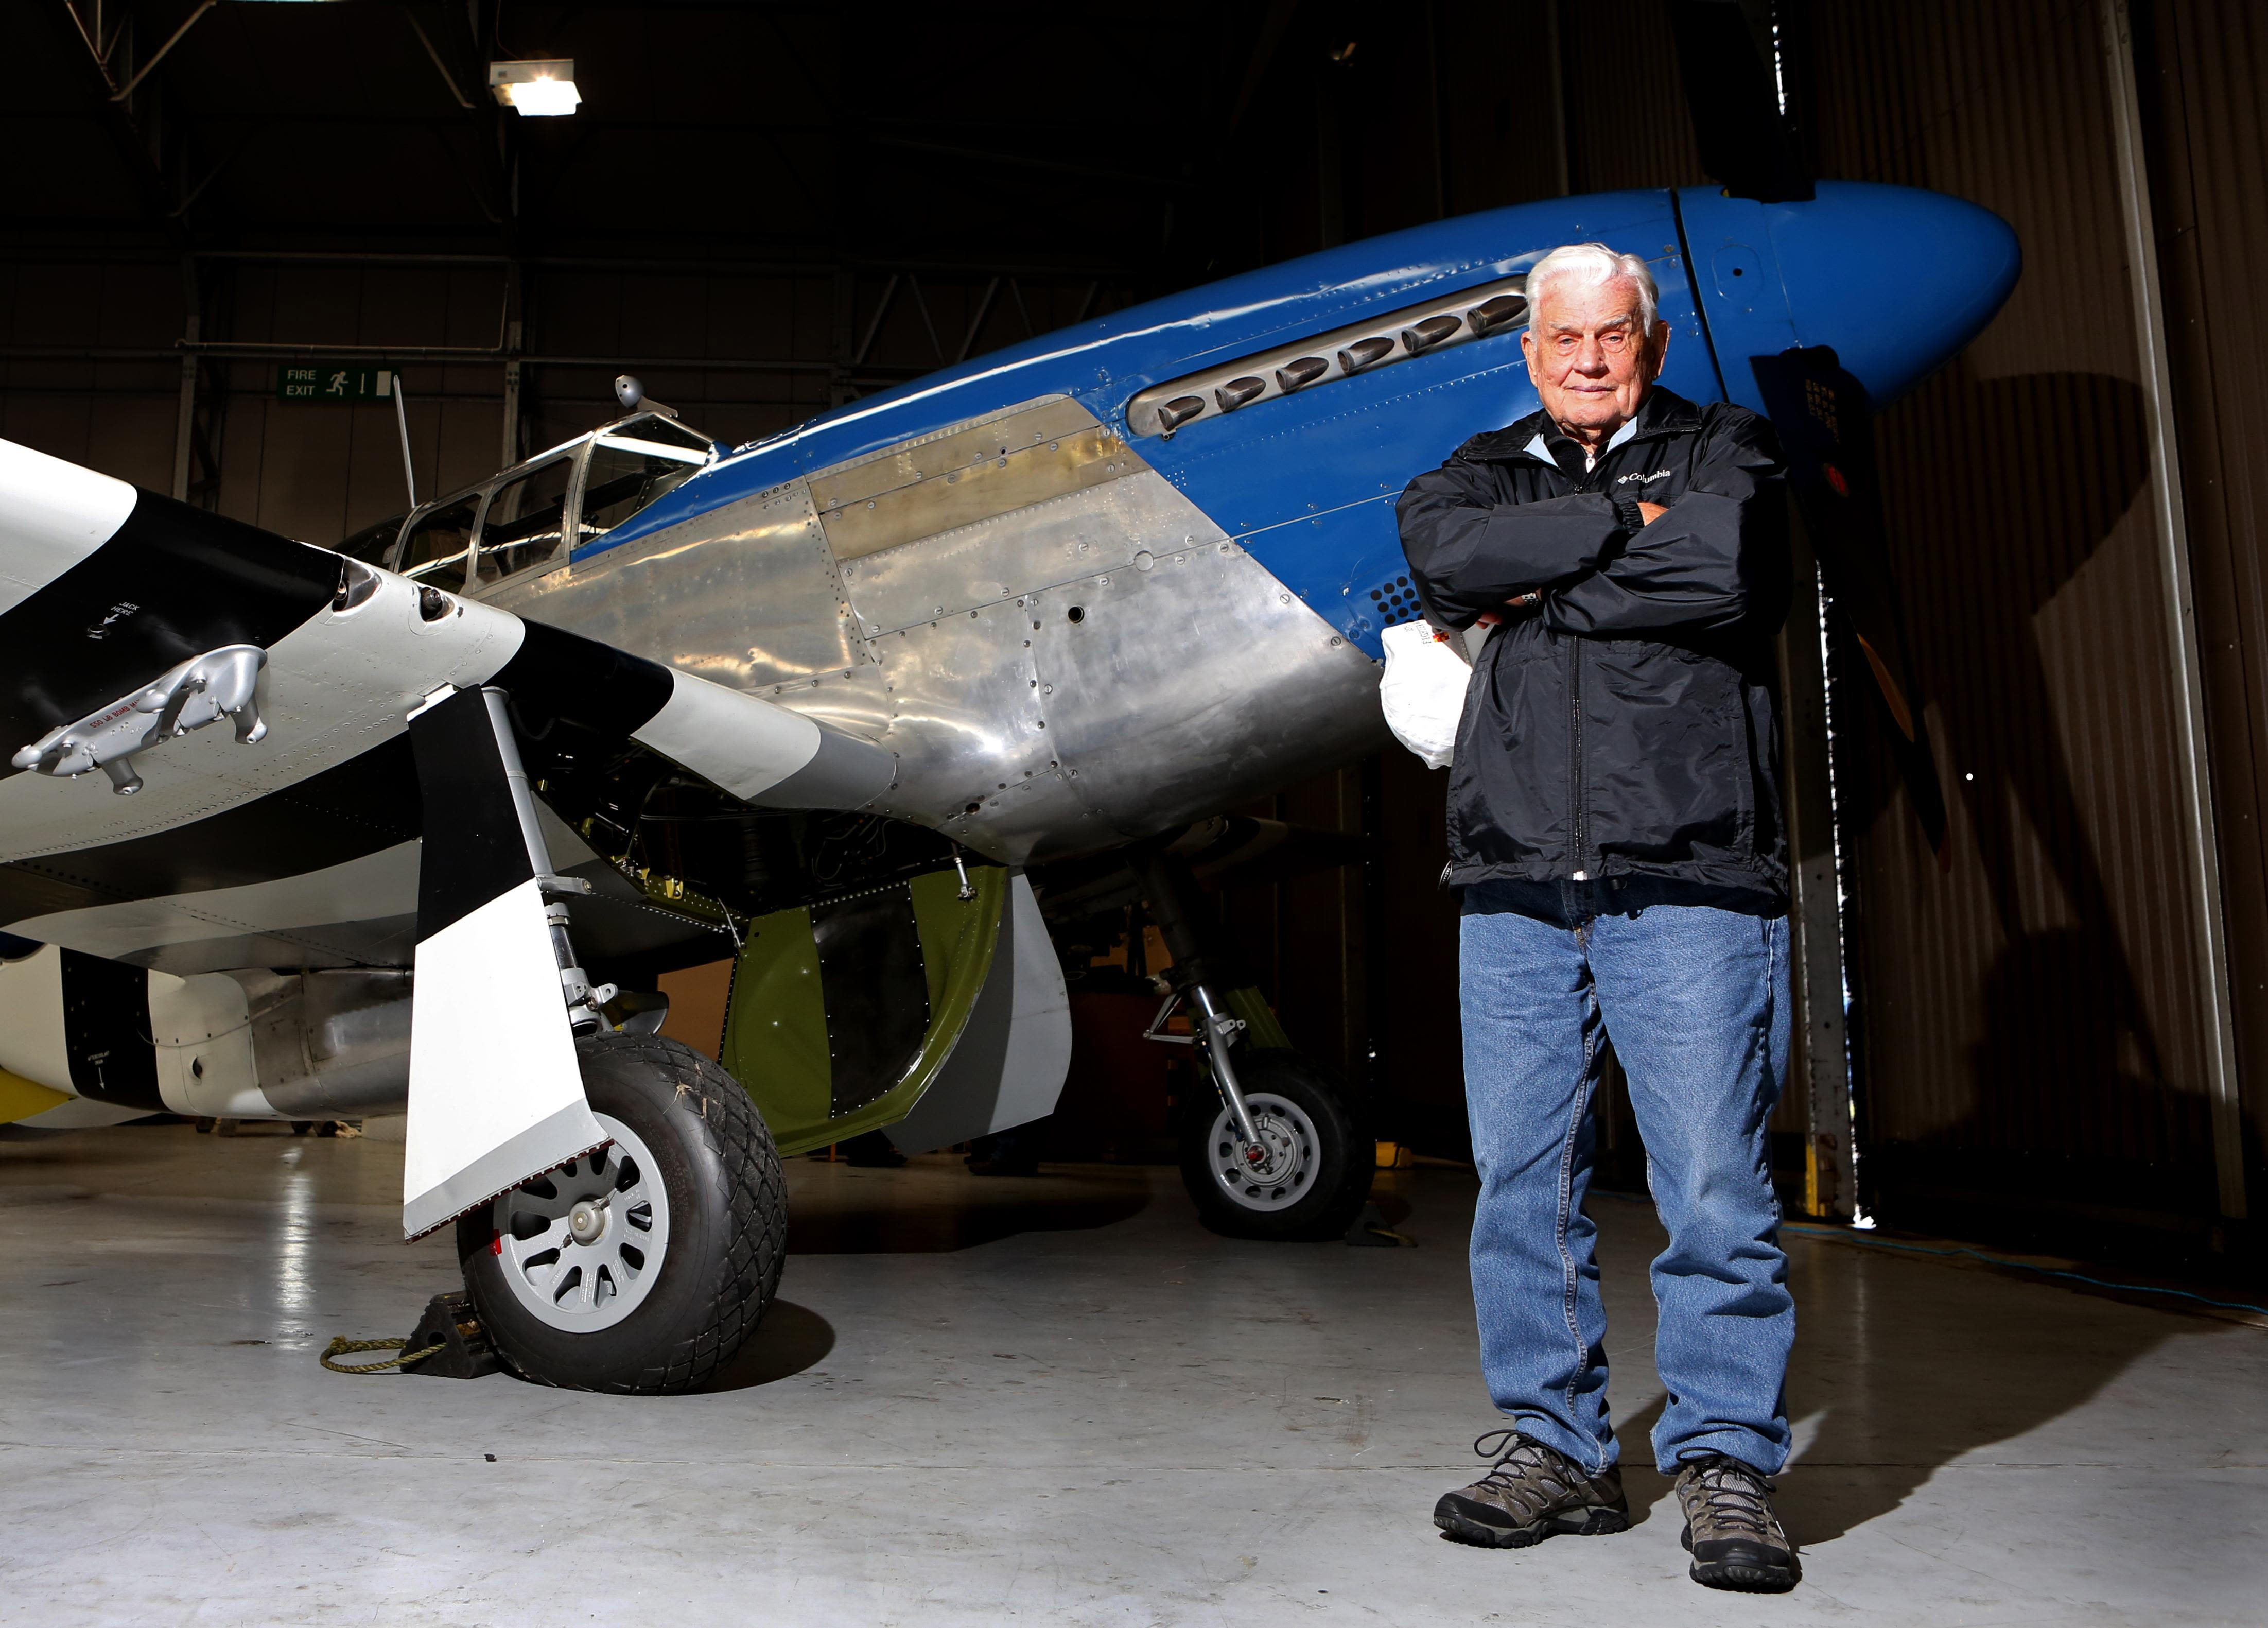 Bud Anderson, last surviving WWII triple ace pilot, dies at 102